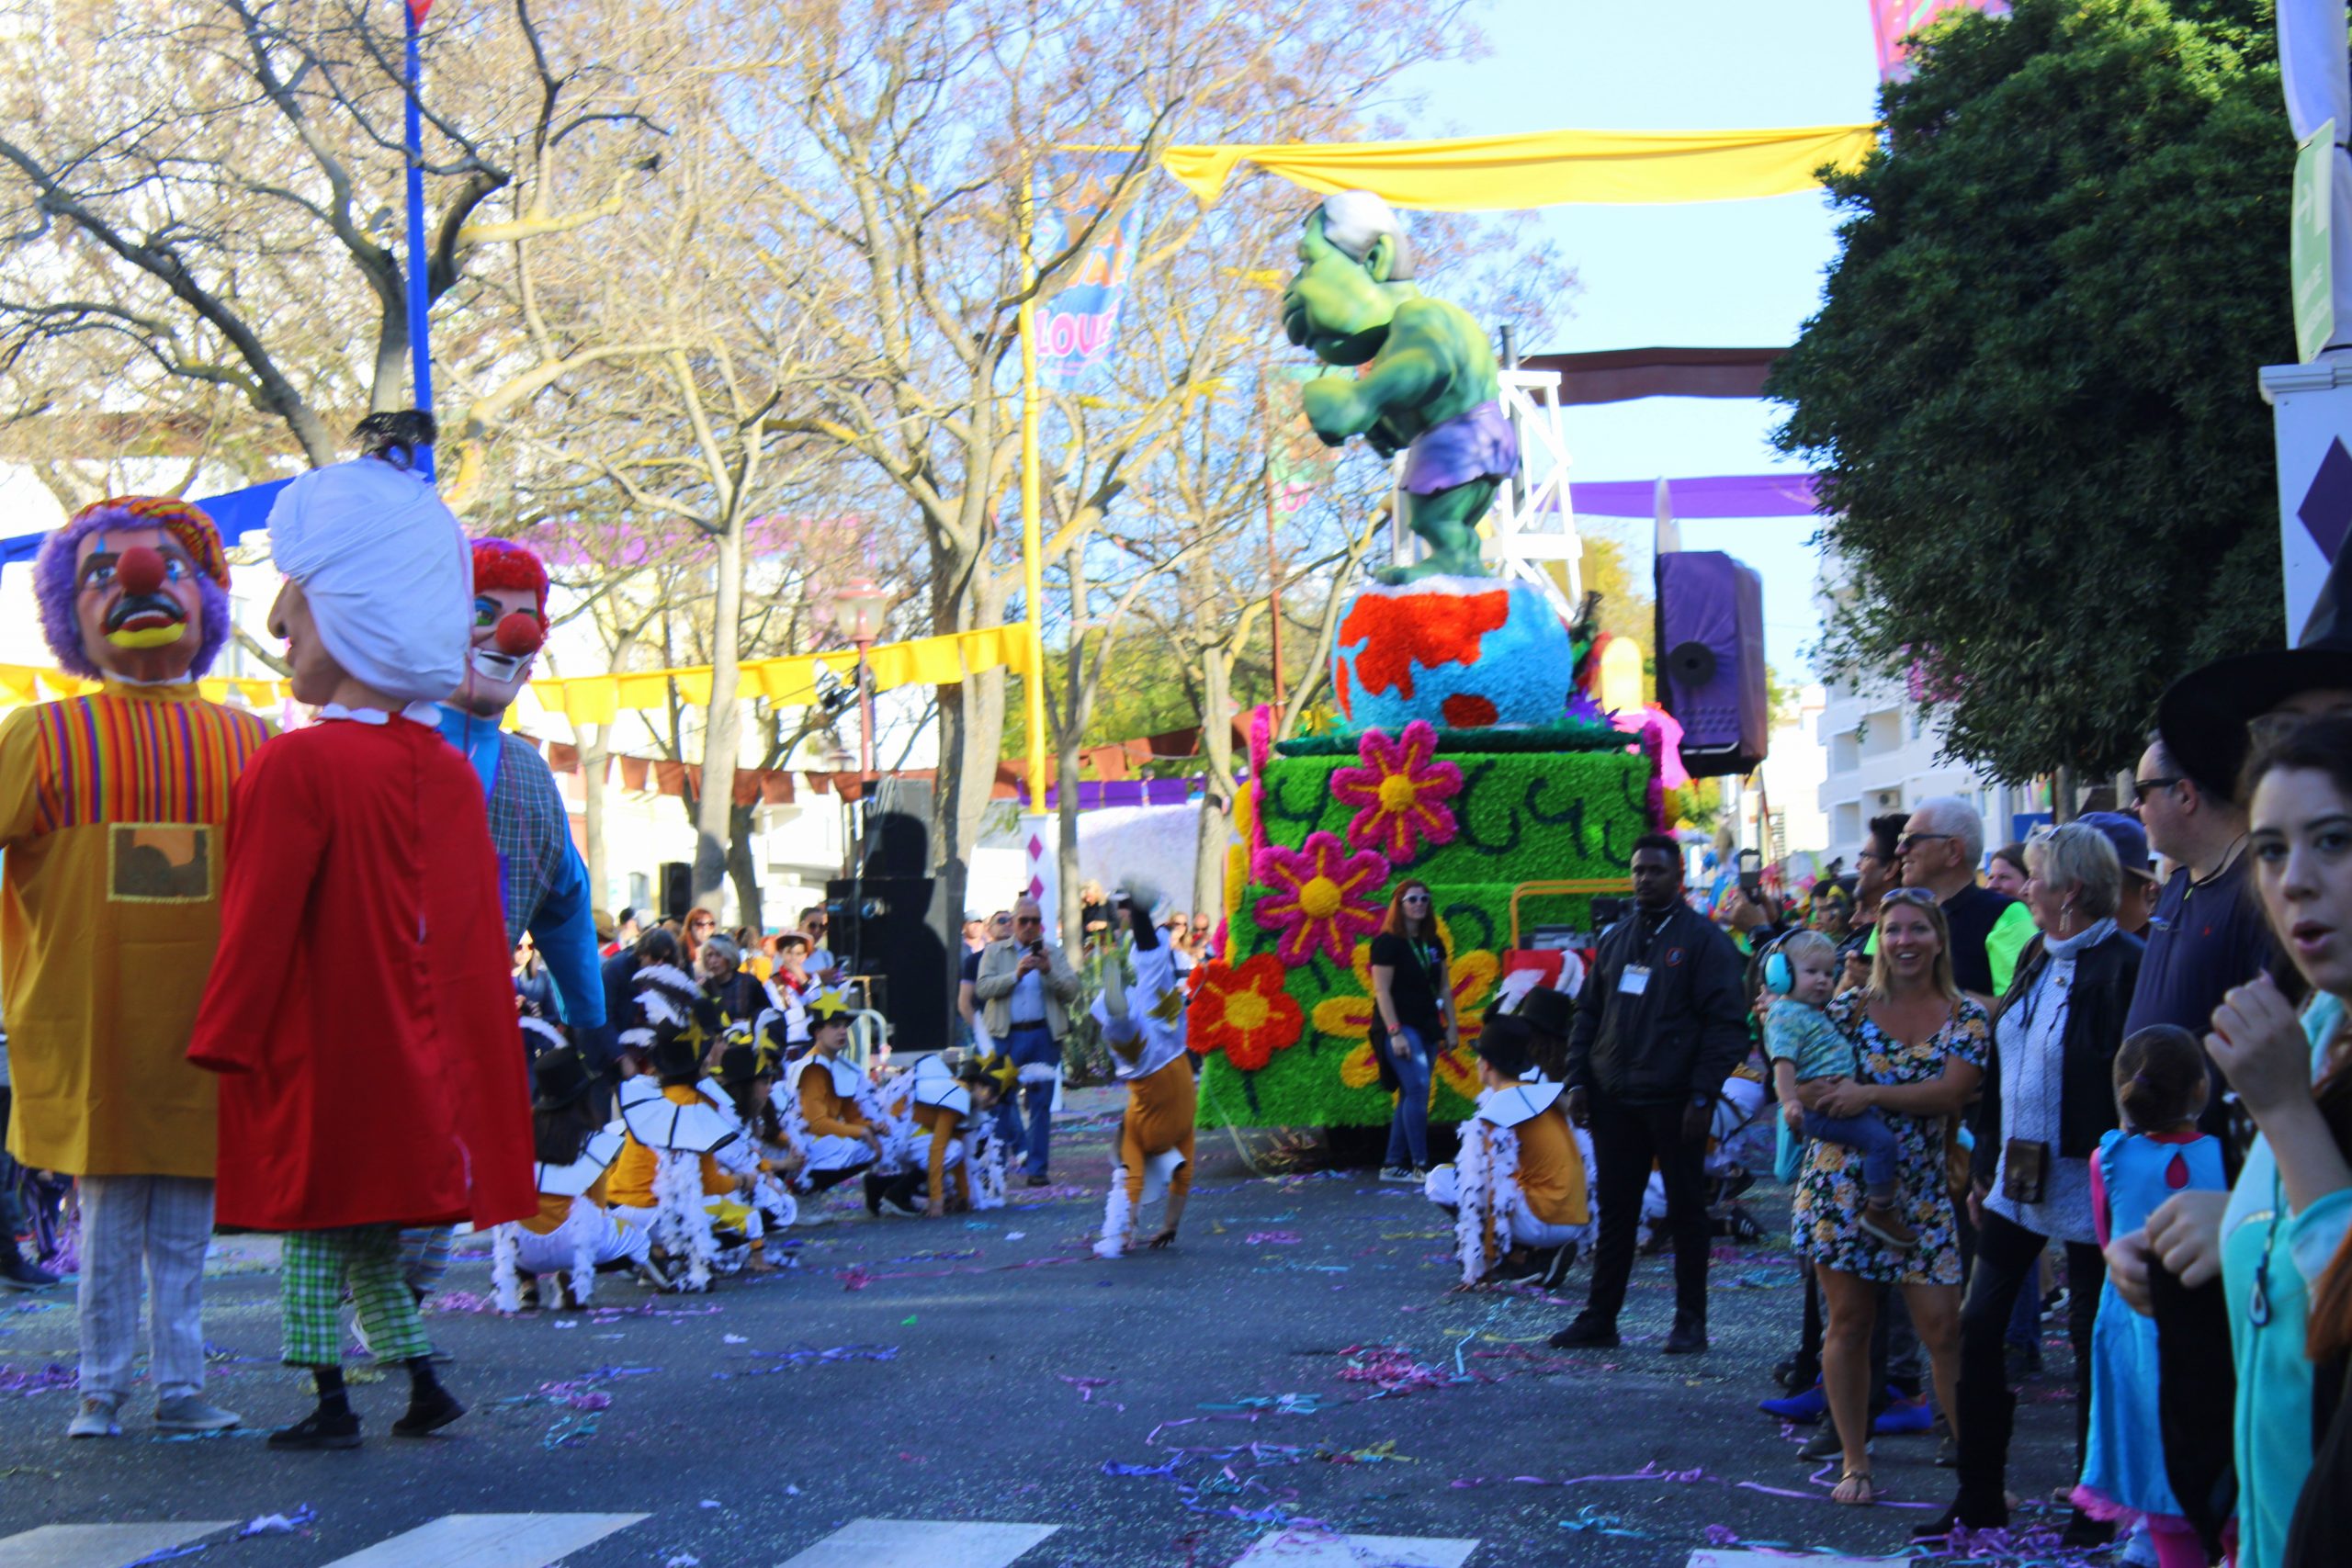 Carnaval en el sur de Portugal: Loule